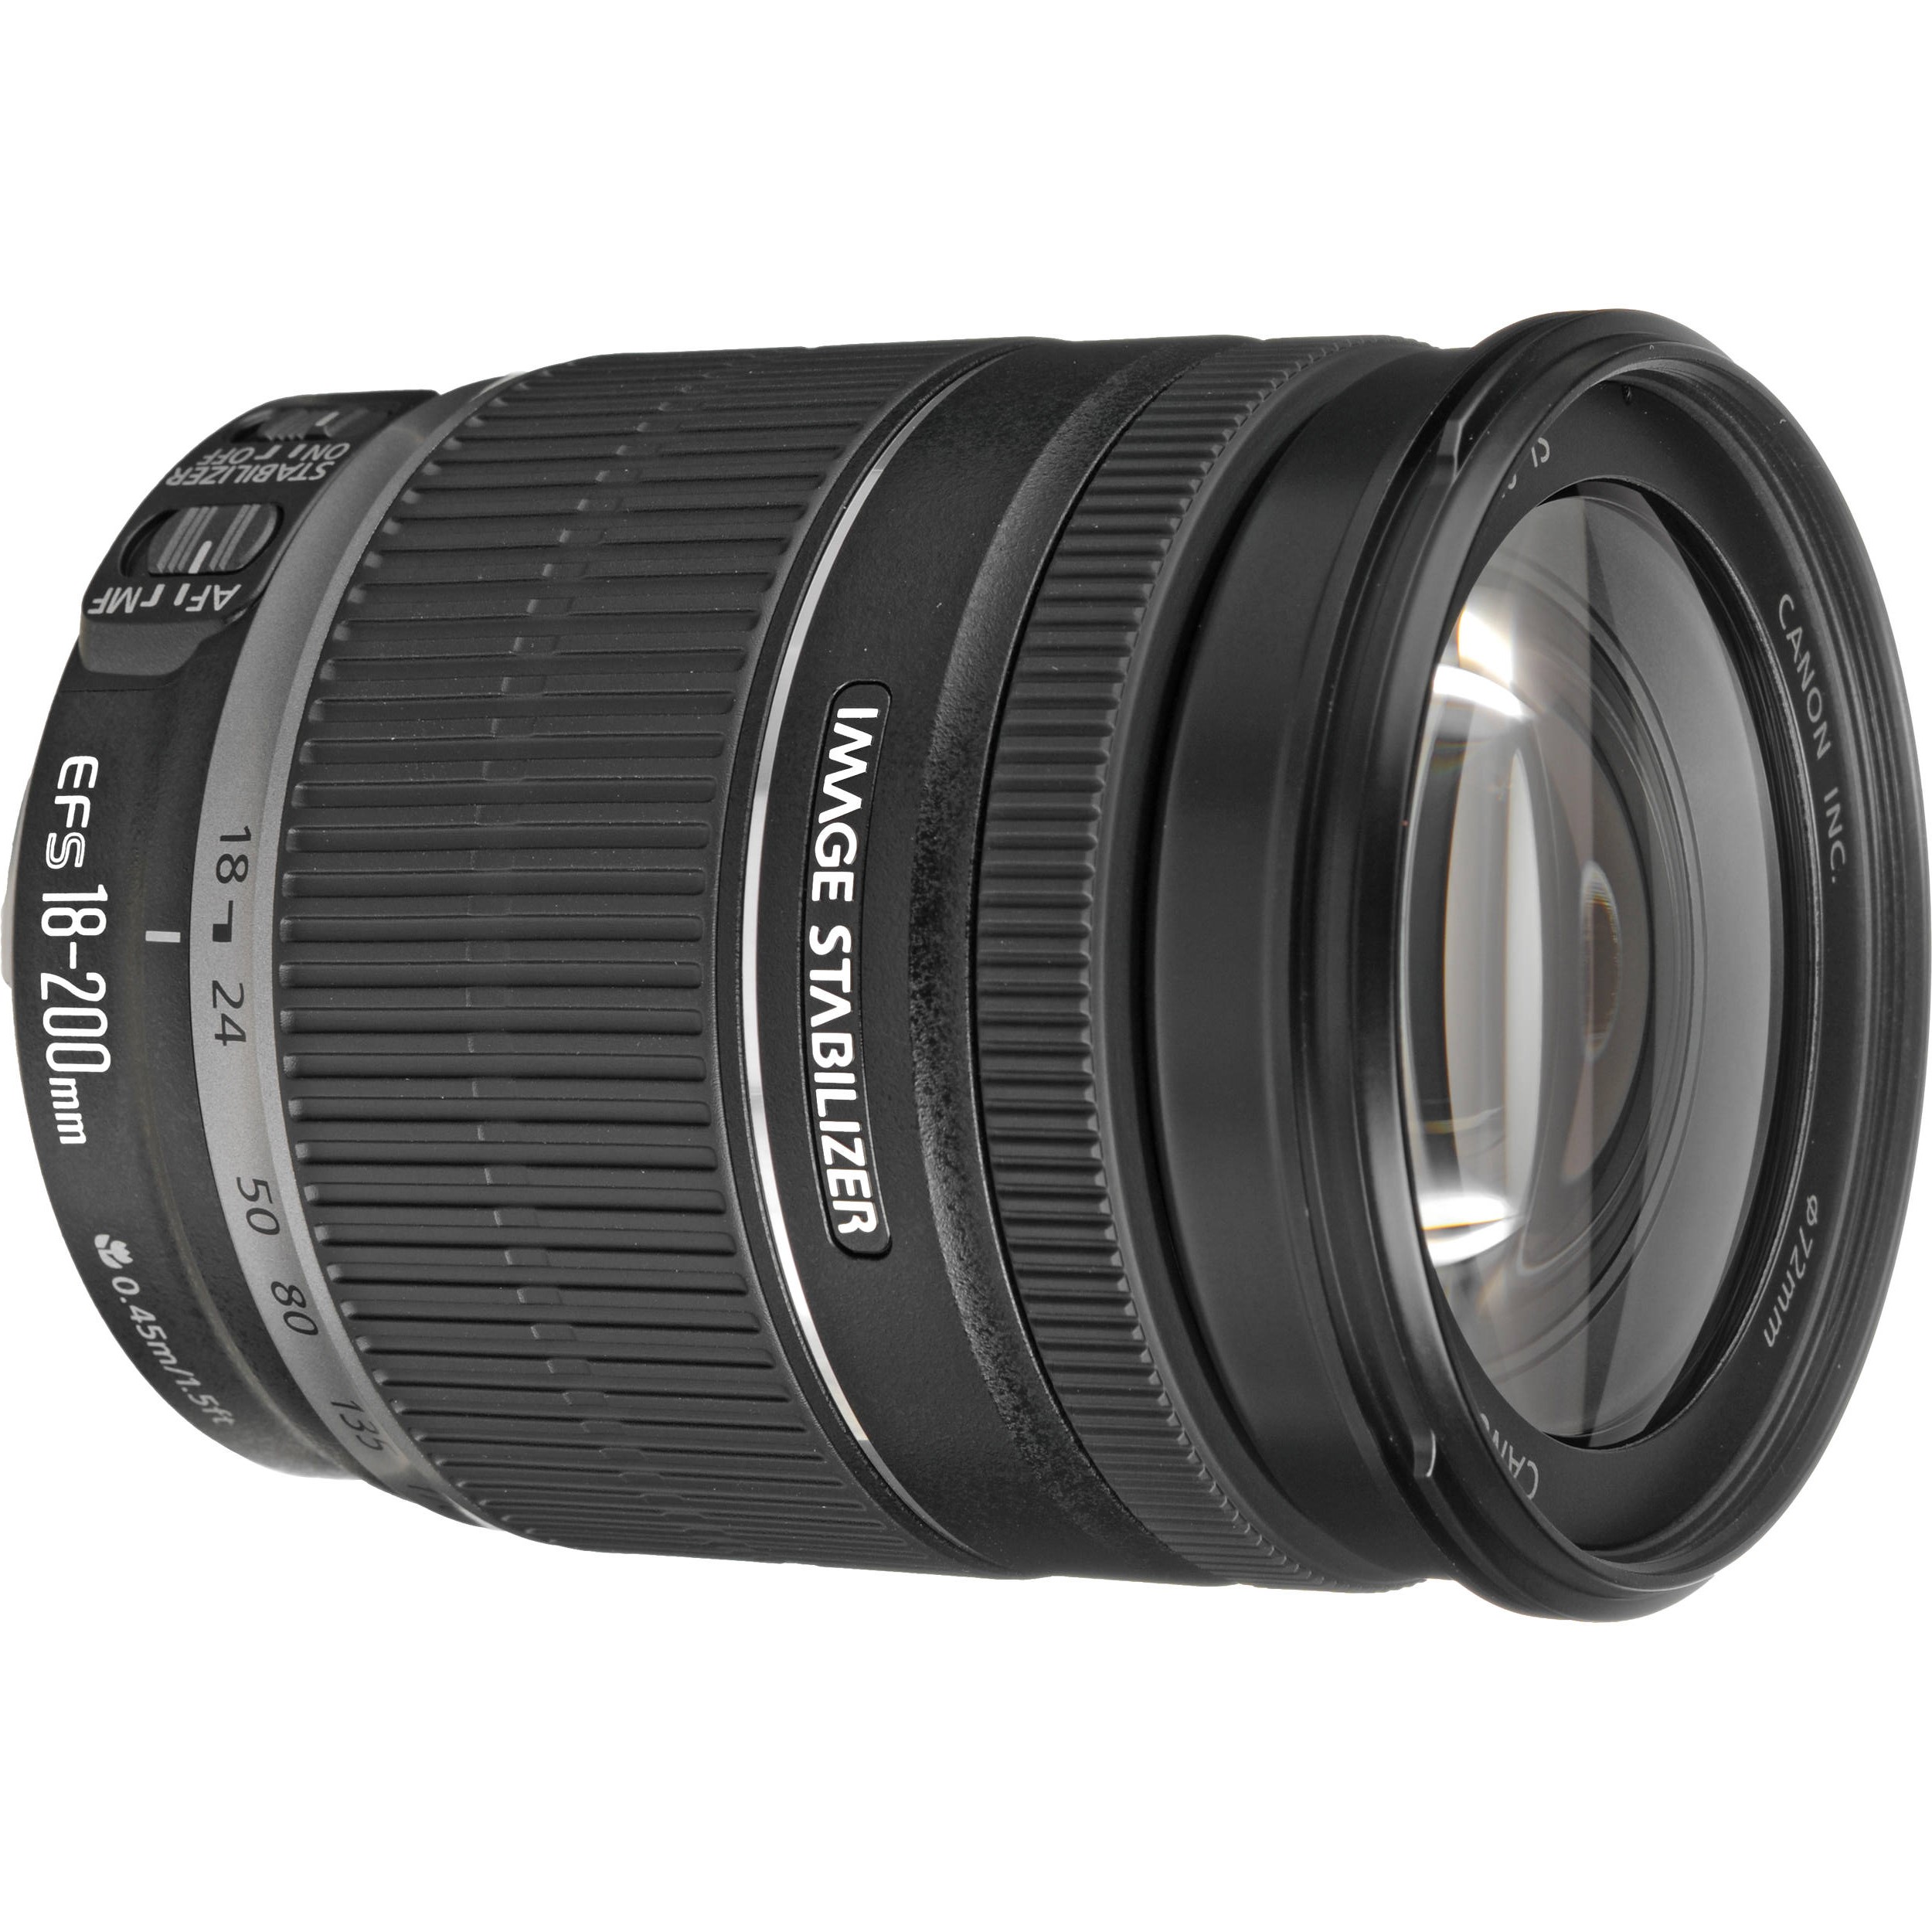 Canon EF-S 18-300mm f/3.5-5.6 IS STM lens to be Announced | Lens Rumors